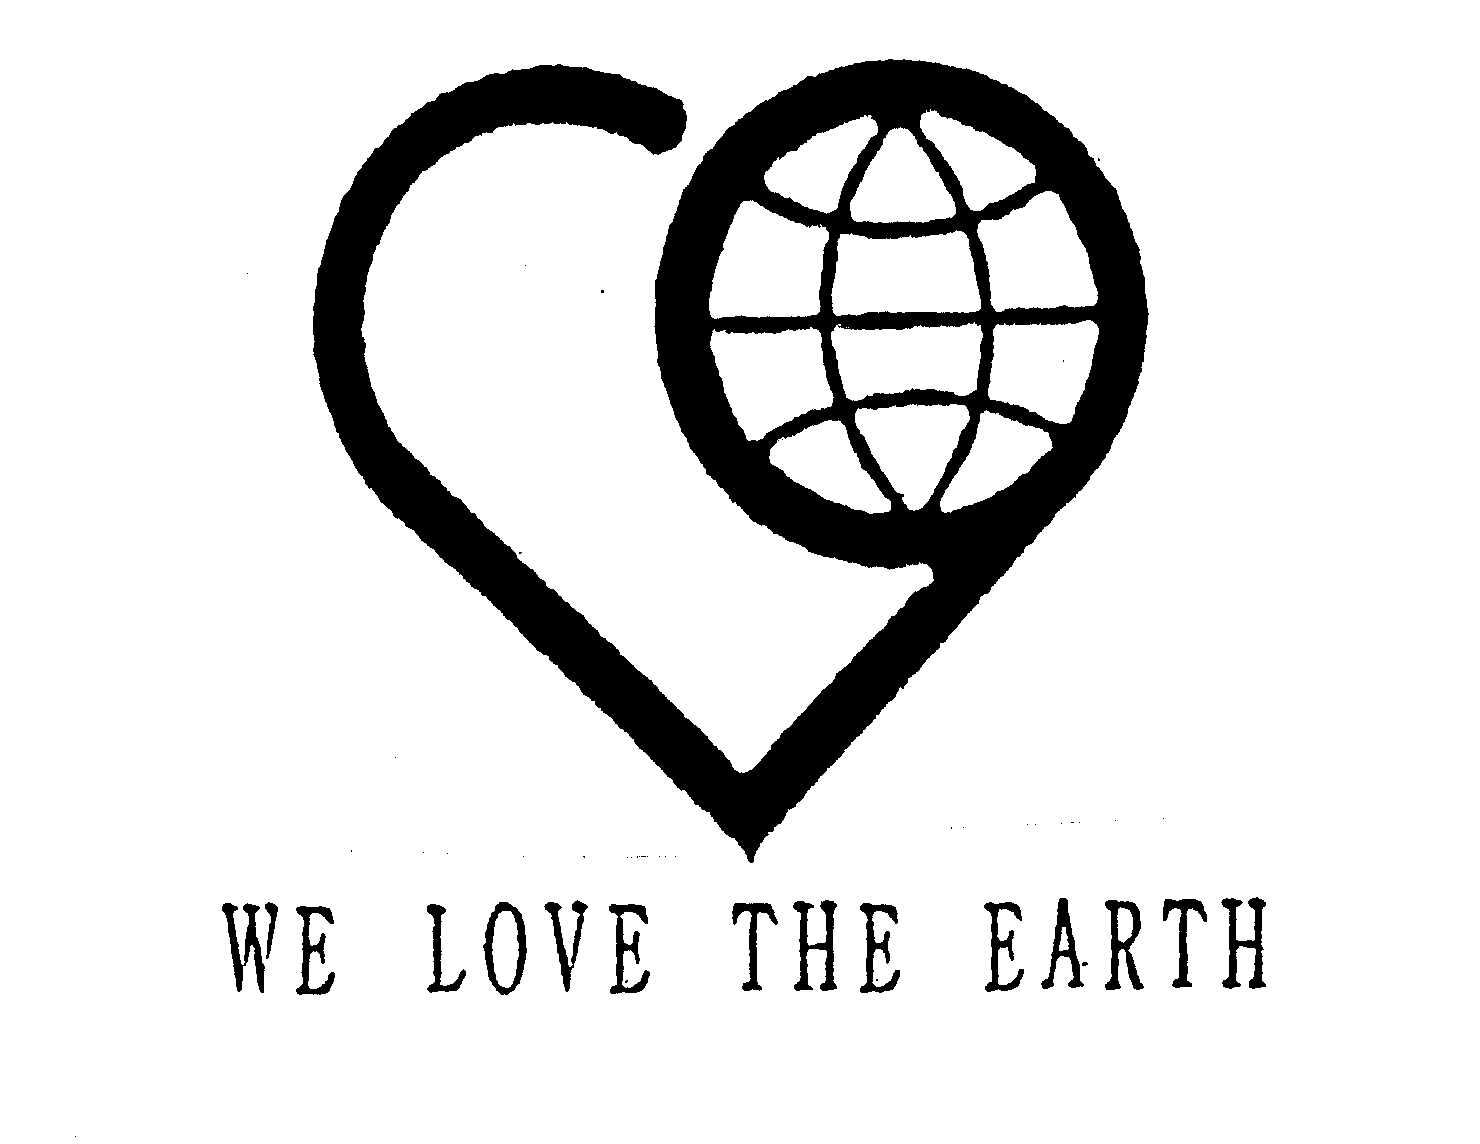  WE LOVE THE EARTH